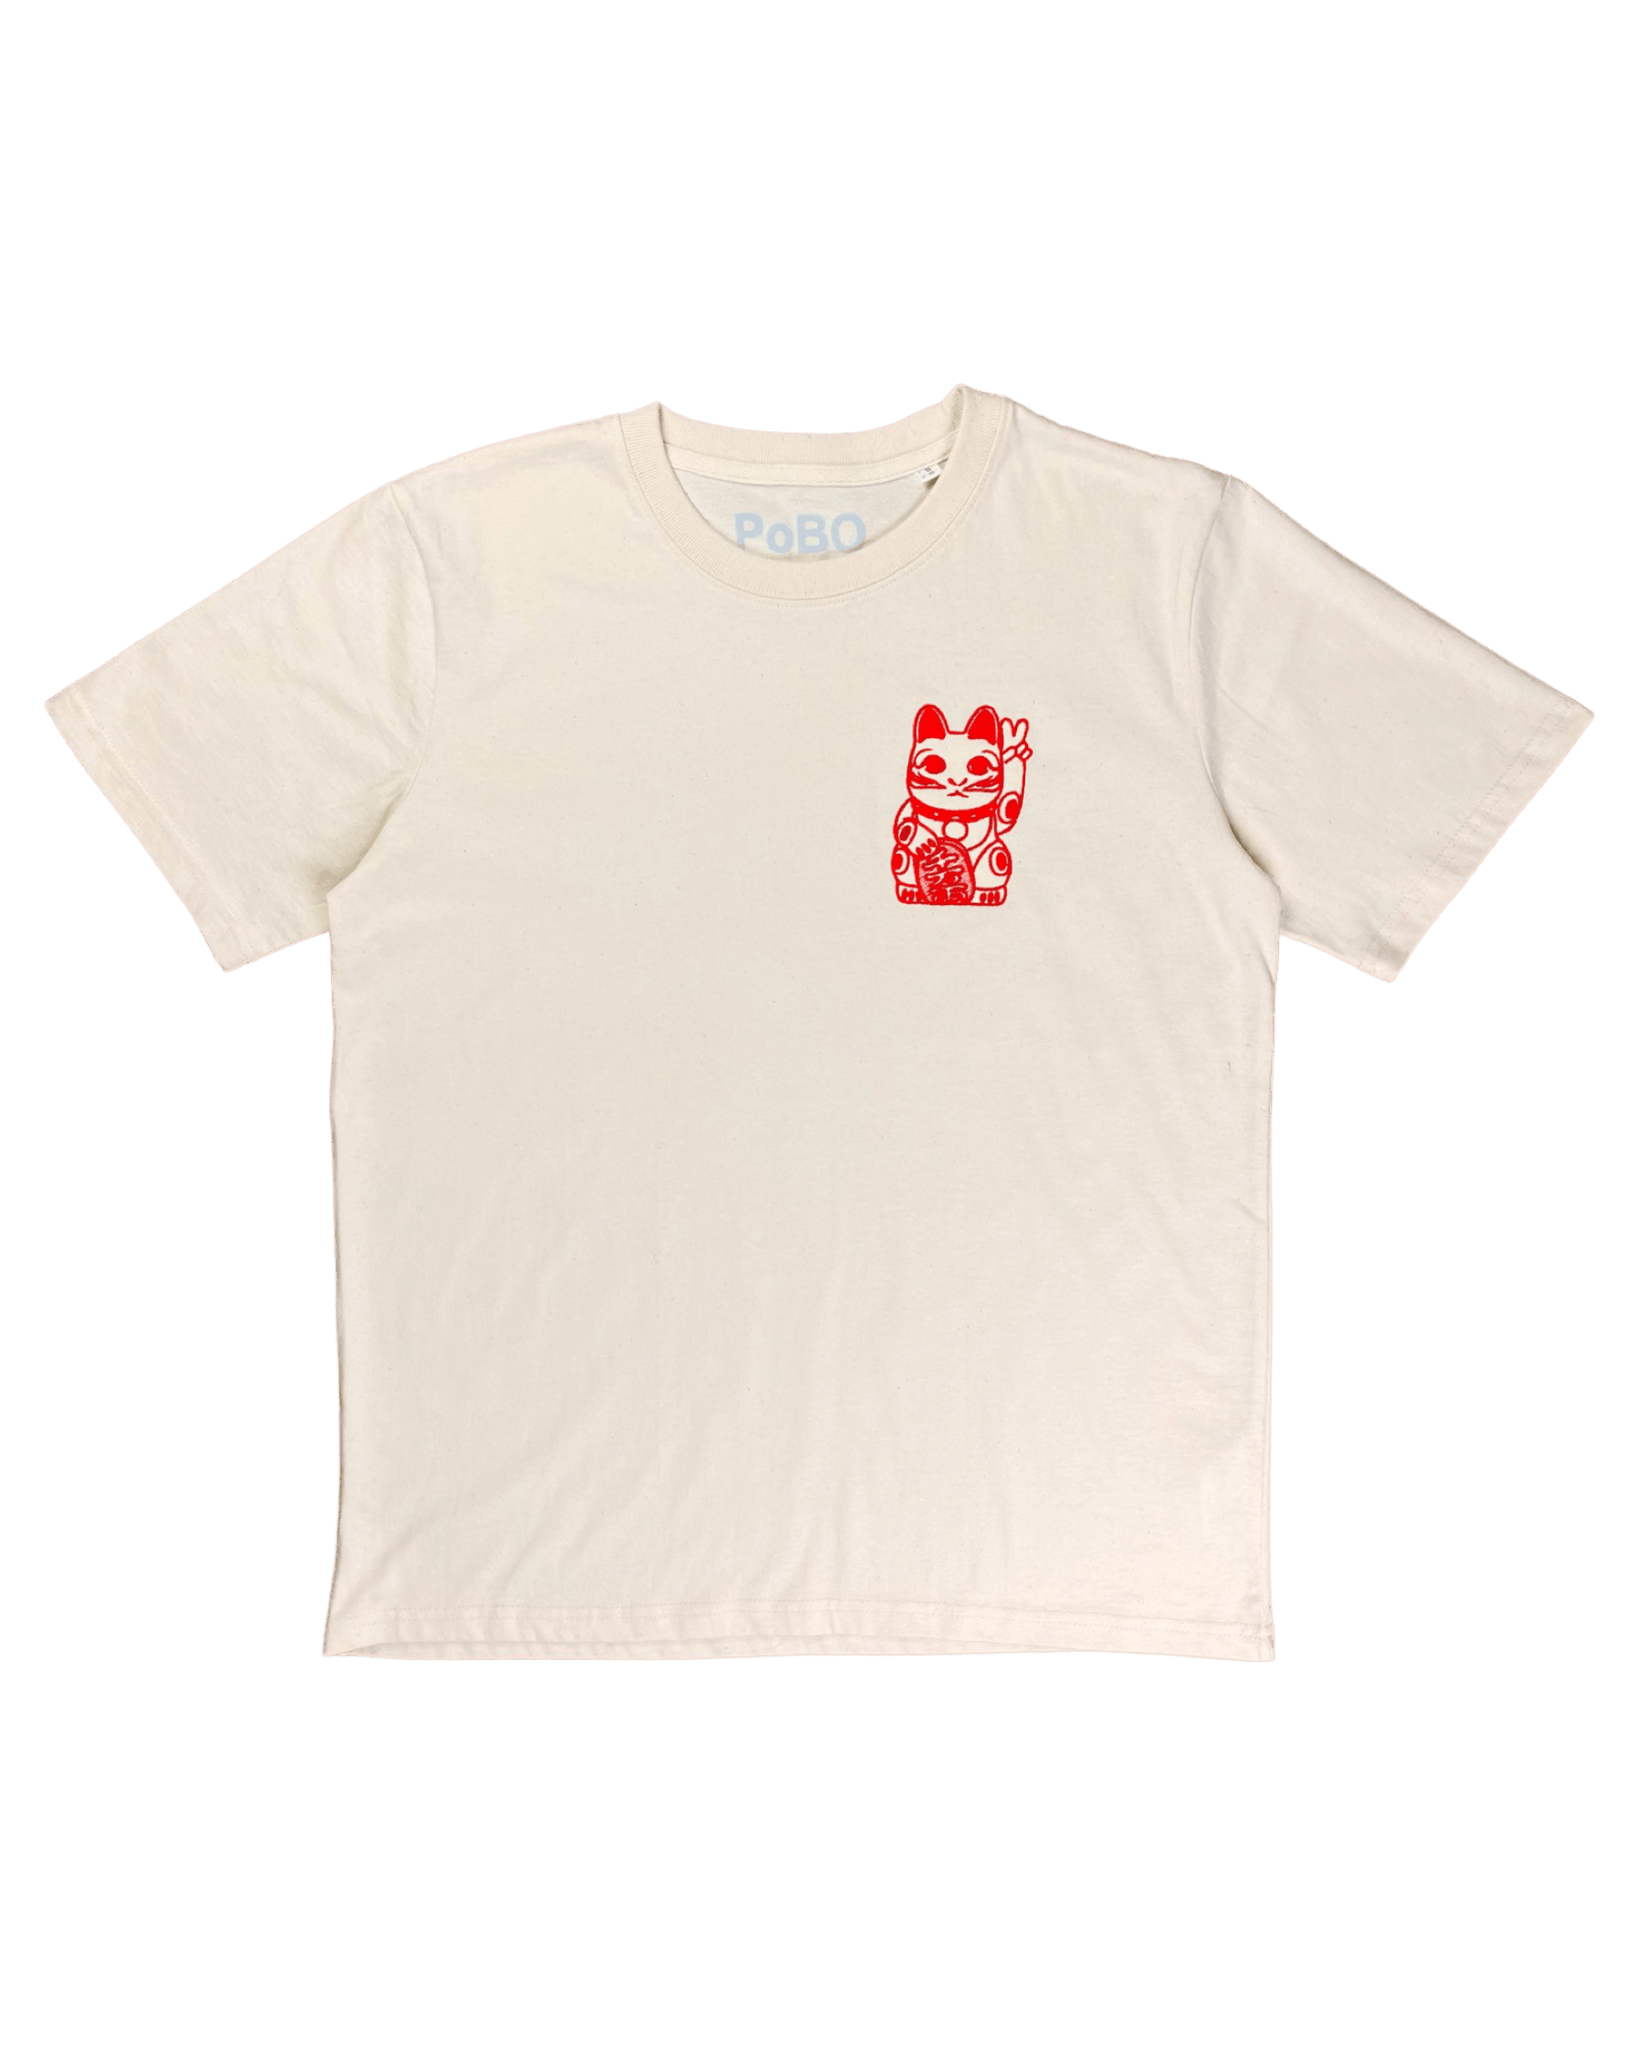 Organic Cotton T-shirt, Medium Fit - free shipping - PoBO